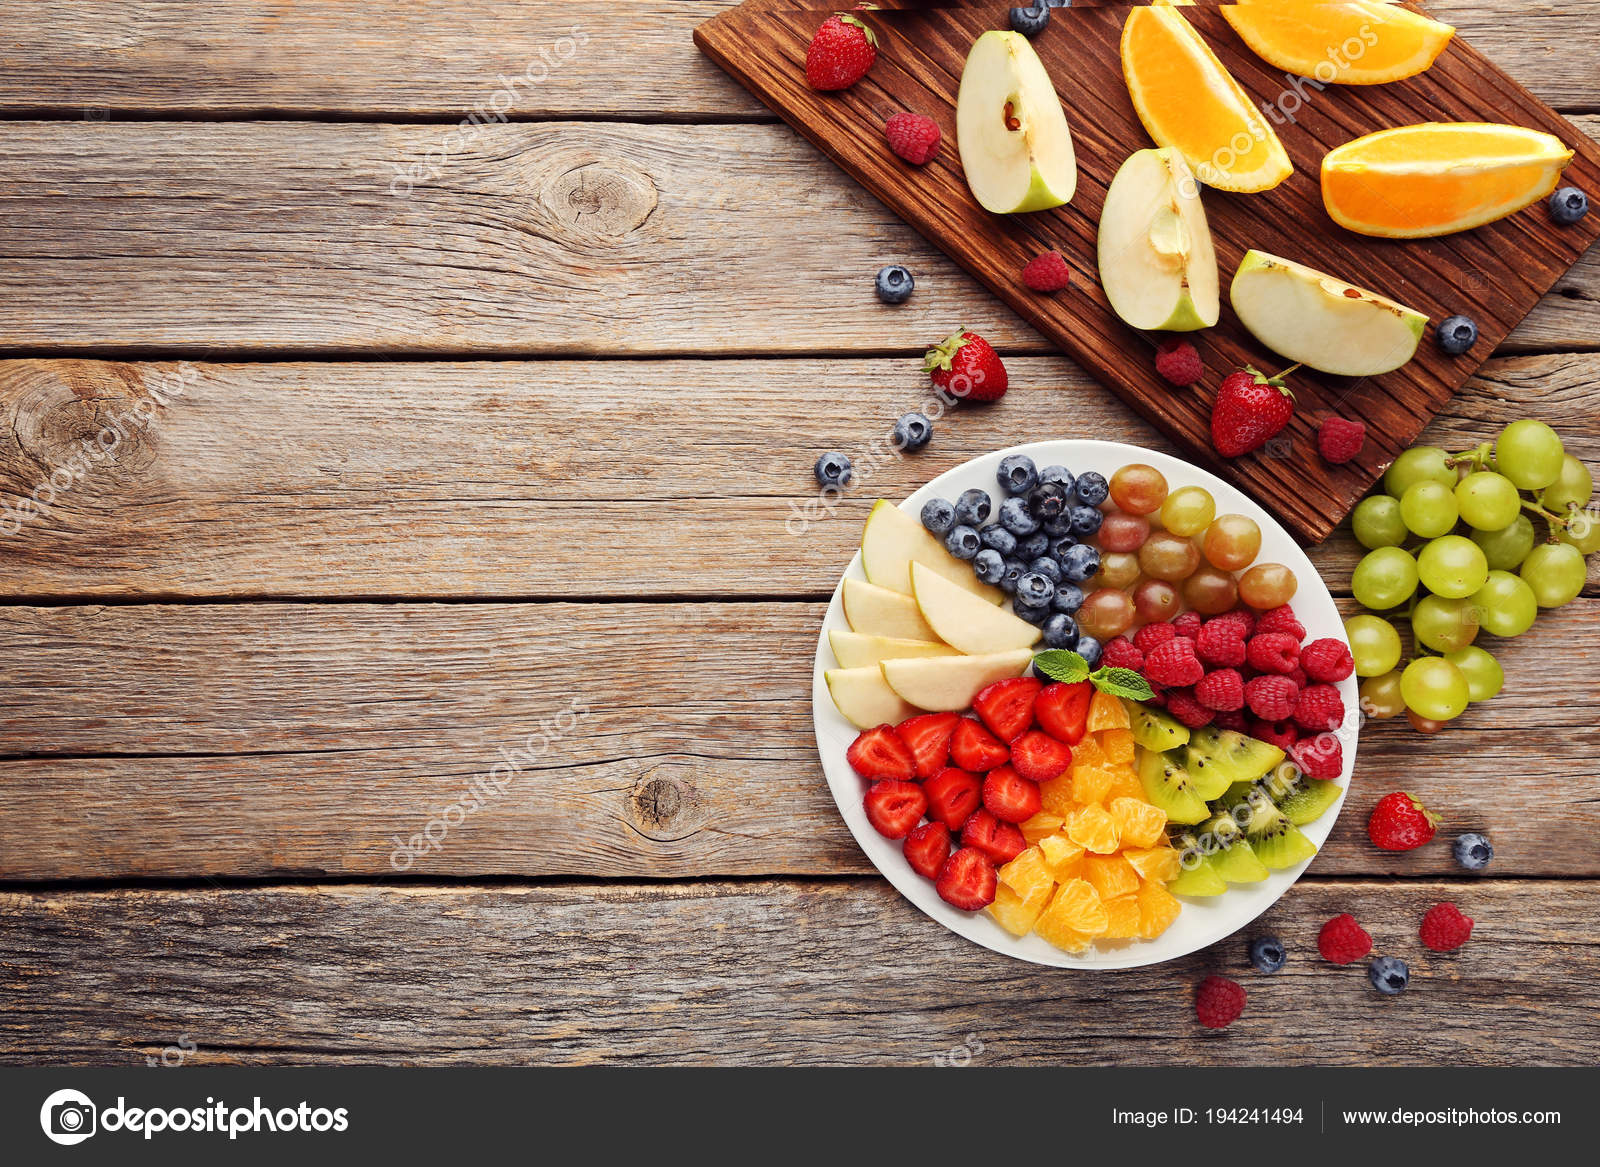 https://st3.depositphotos.com/4278641/19424/i/1600/depositphotos_194241494-stock-photo-fresh-fruits-plate-cutting-board.jpg